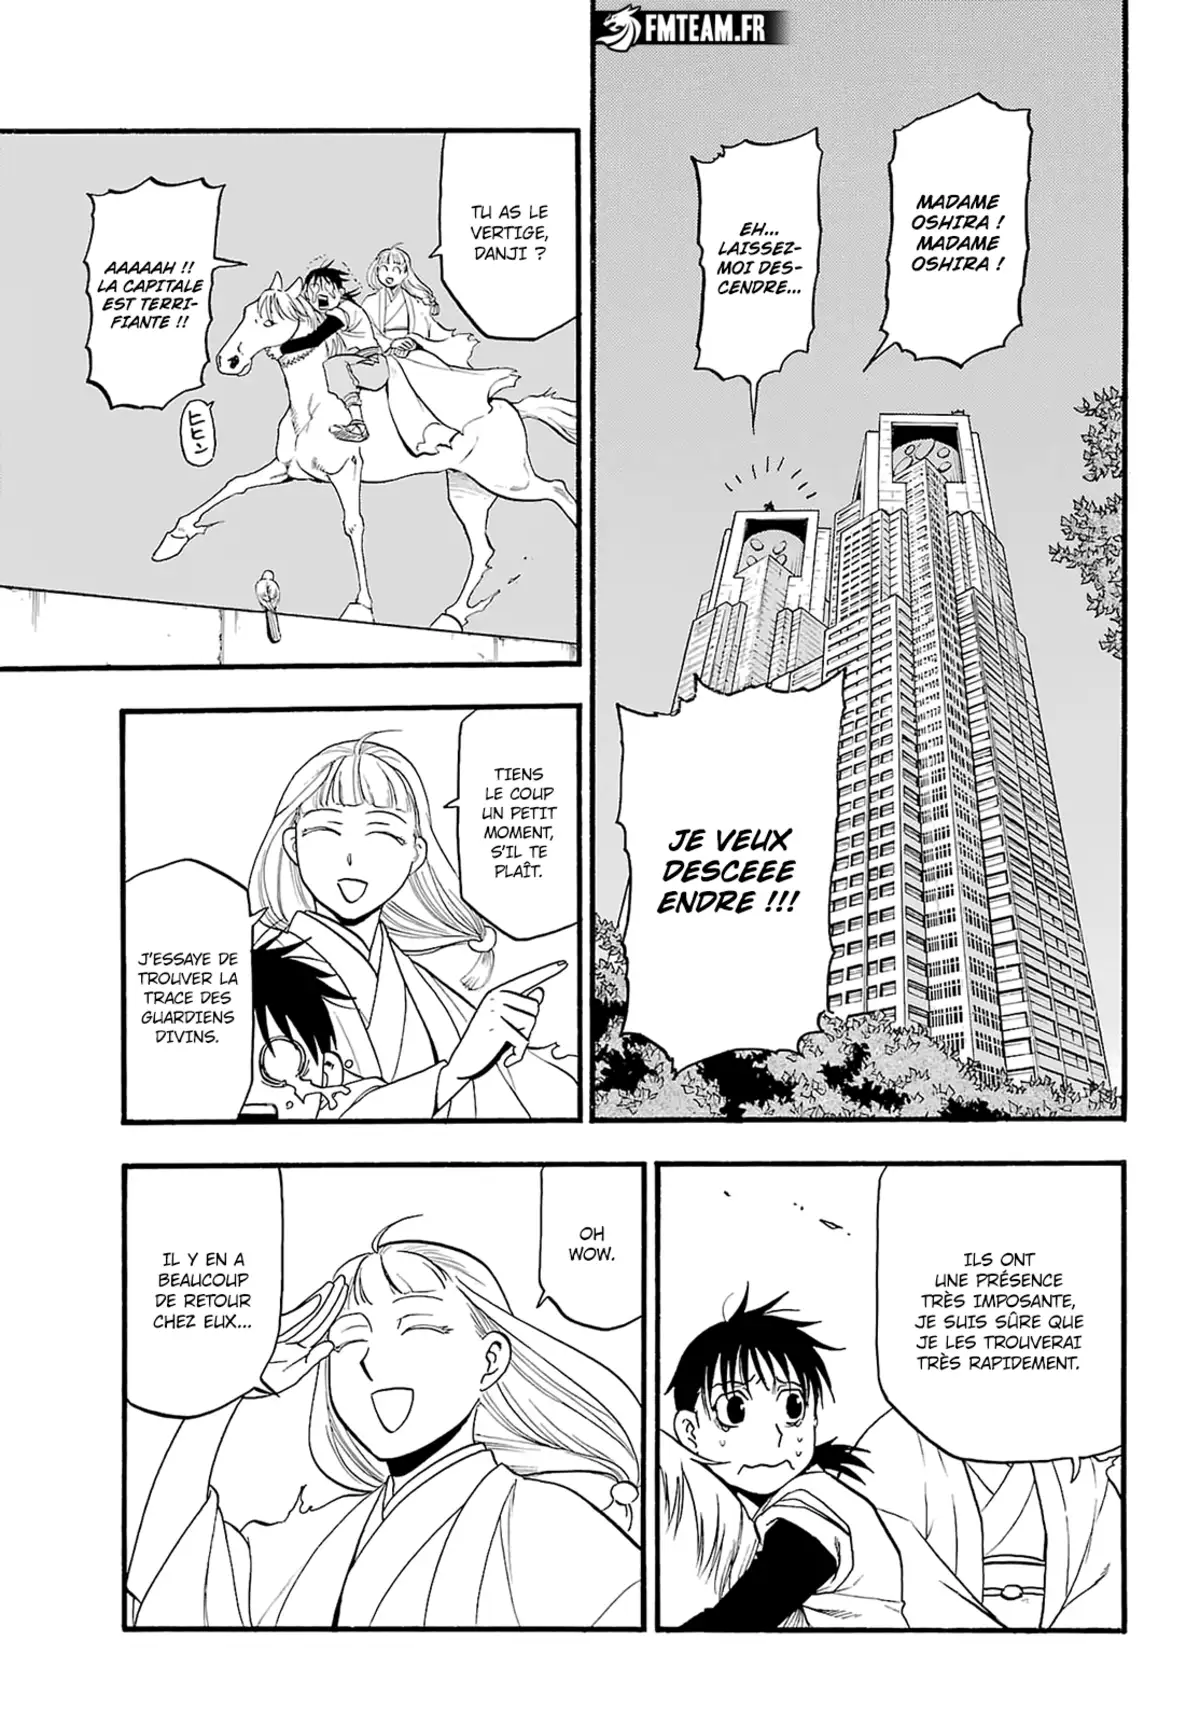 Yomi no Tsugai Chapitre 18 page 2